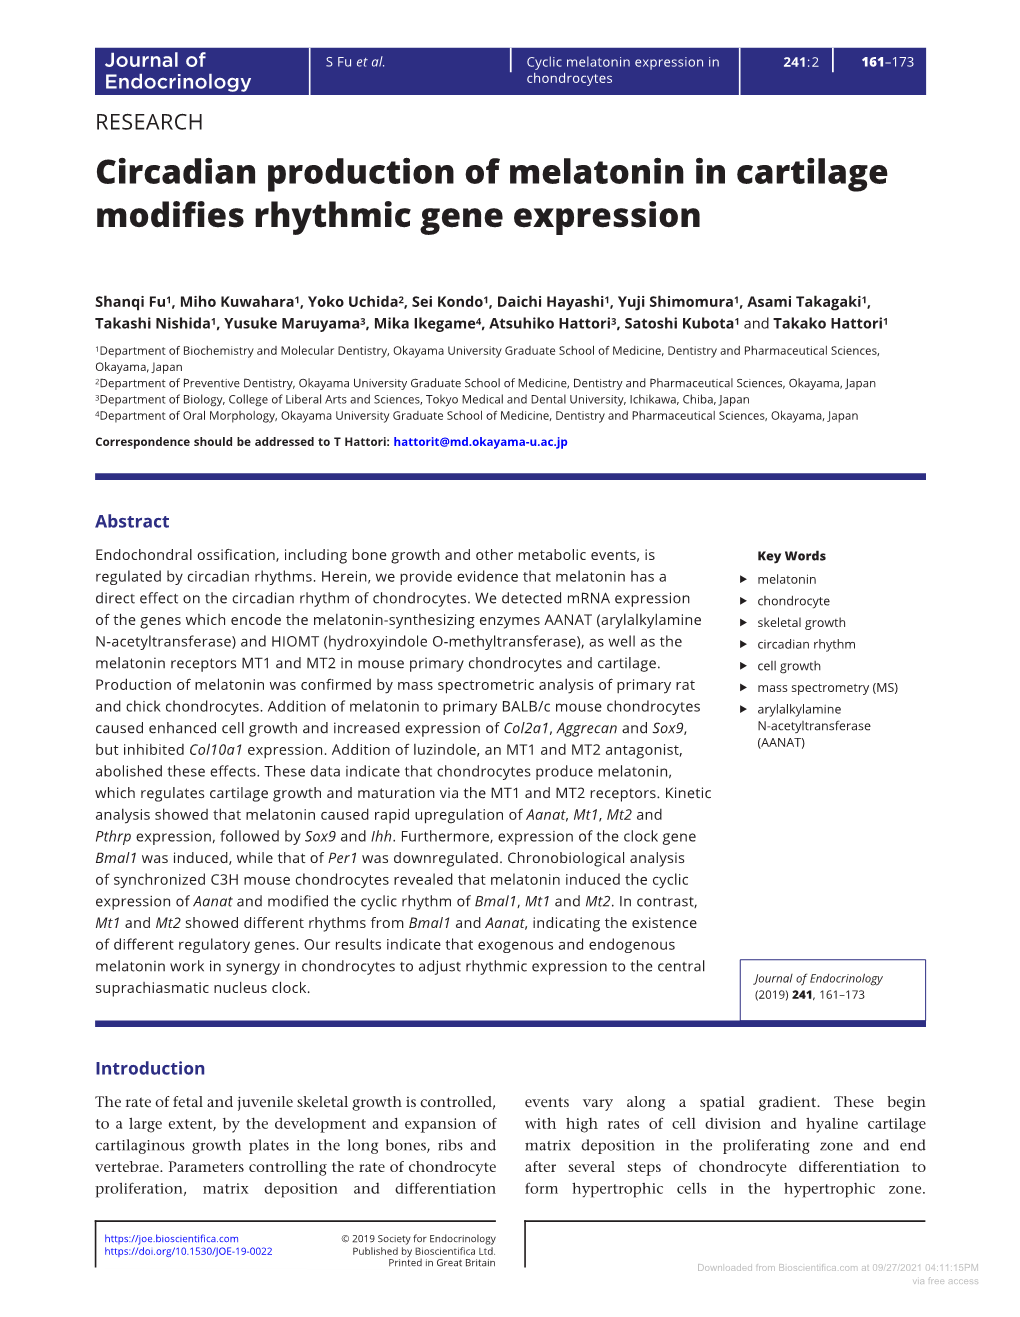 Circadian Production of Melatonin in Cartilage Modifies Rhythmic Gene Expression